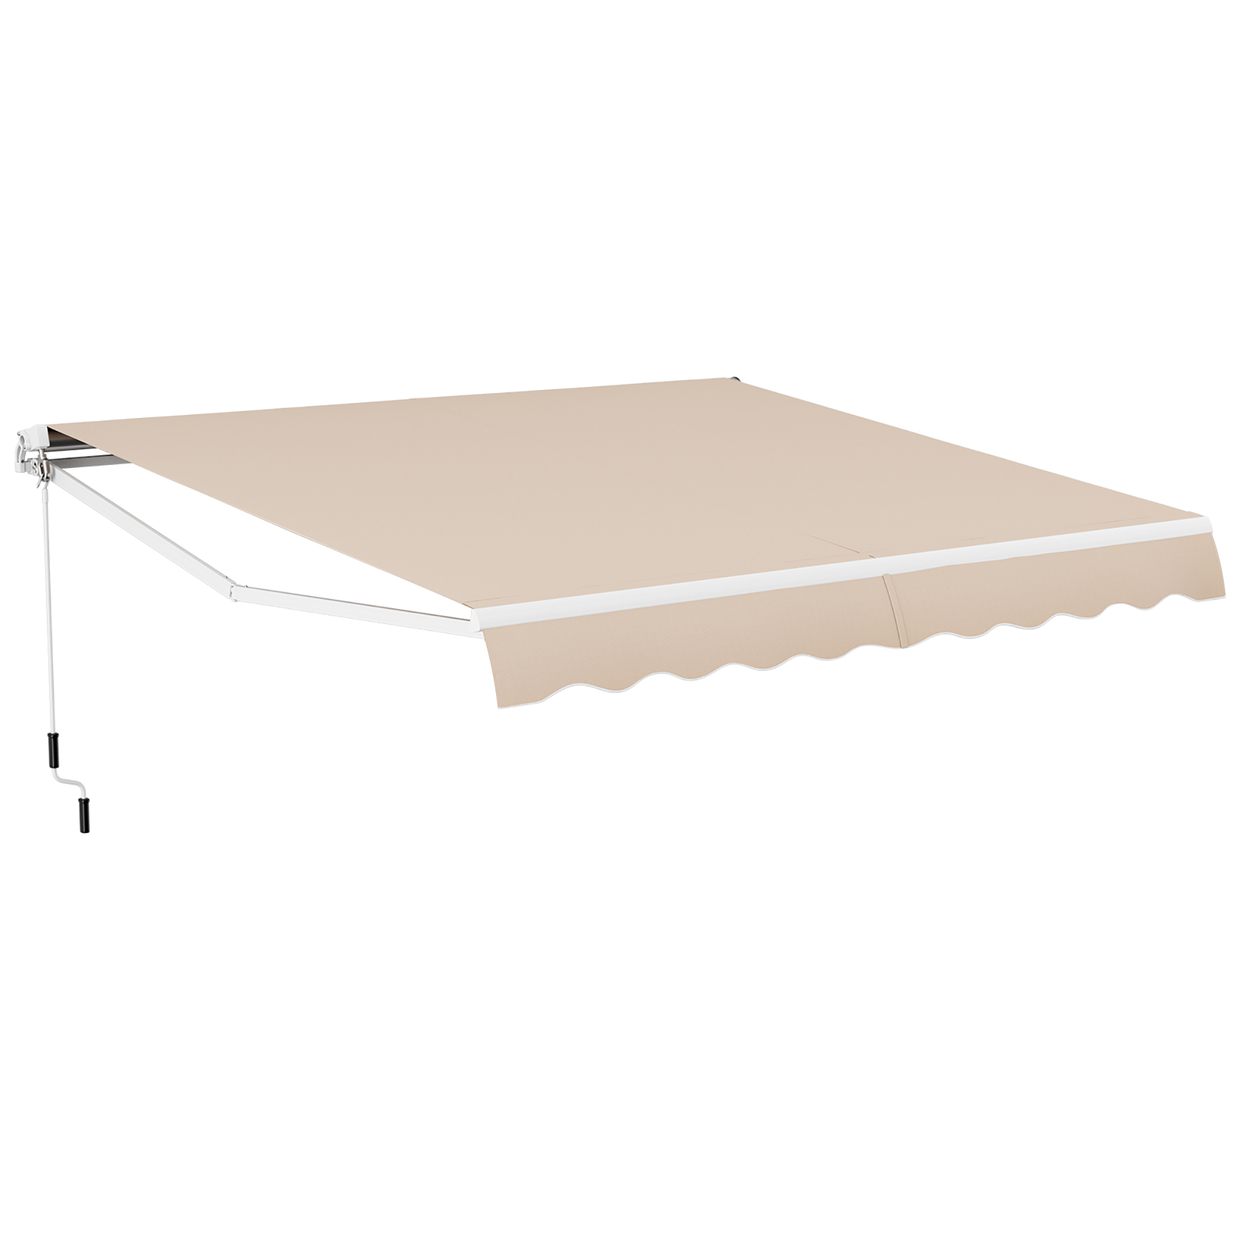 Retractable Patio Awning Aluminum Deck Sunshade Shelter Outdoor Beige - 10' X 8.2'